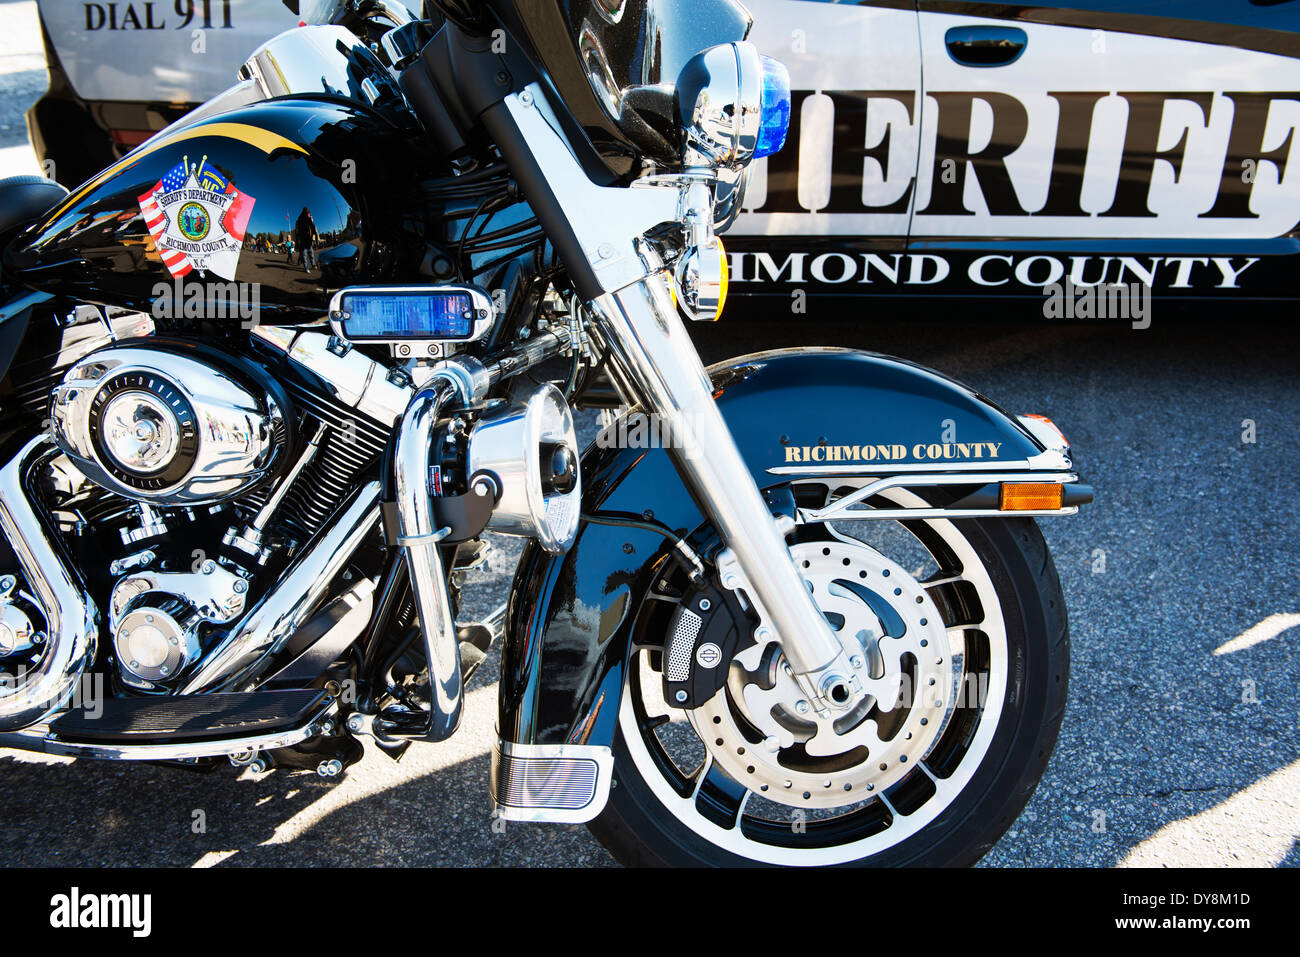 Richmond County North Carolina police sheriff motorcycle and car Stock Photo